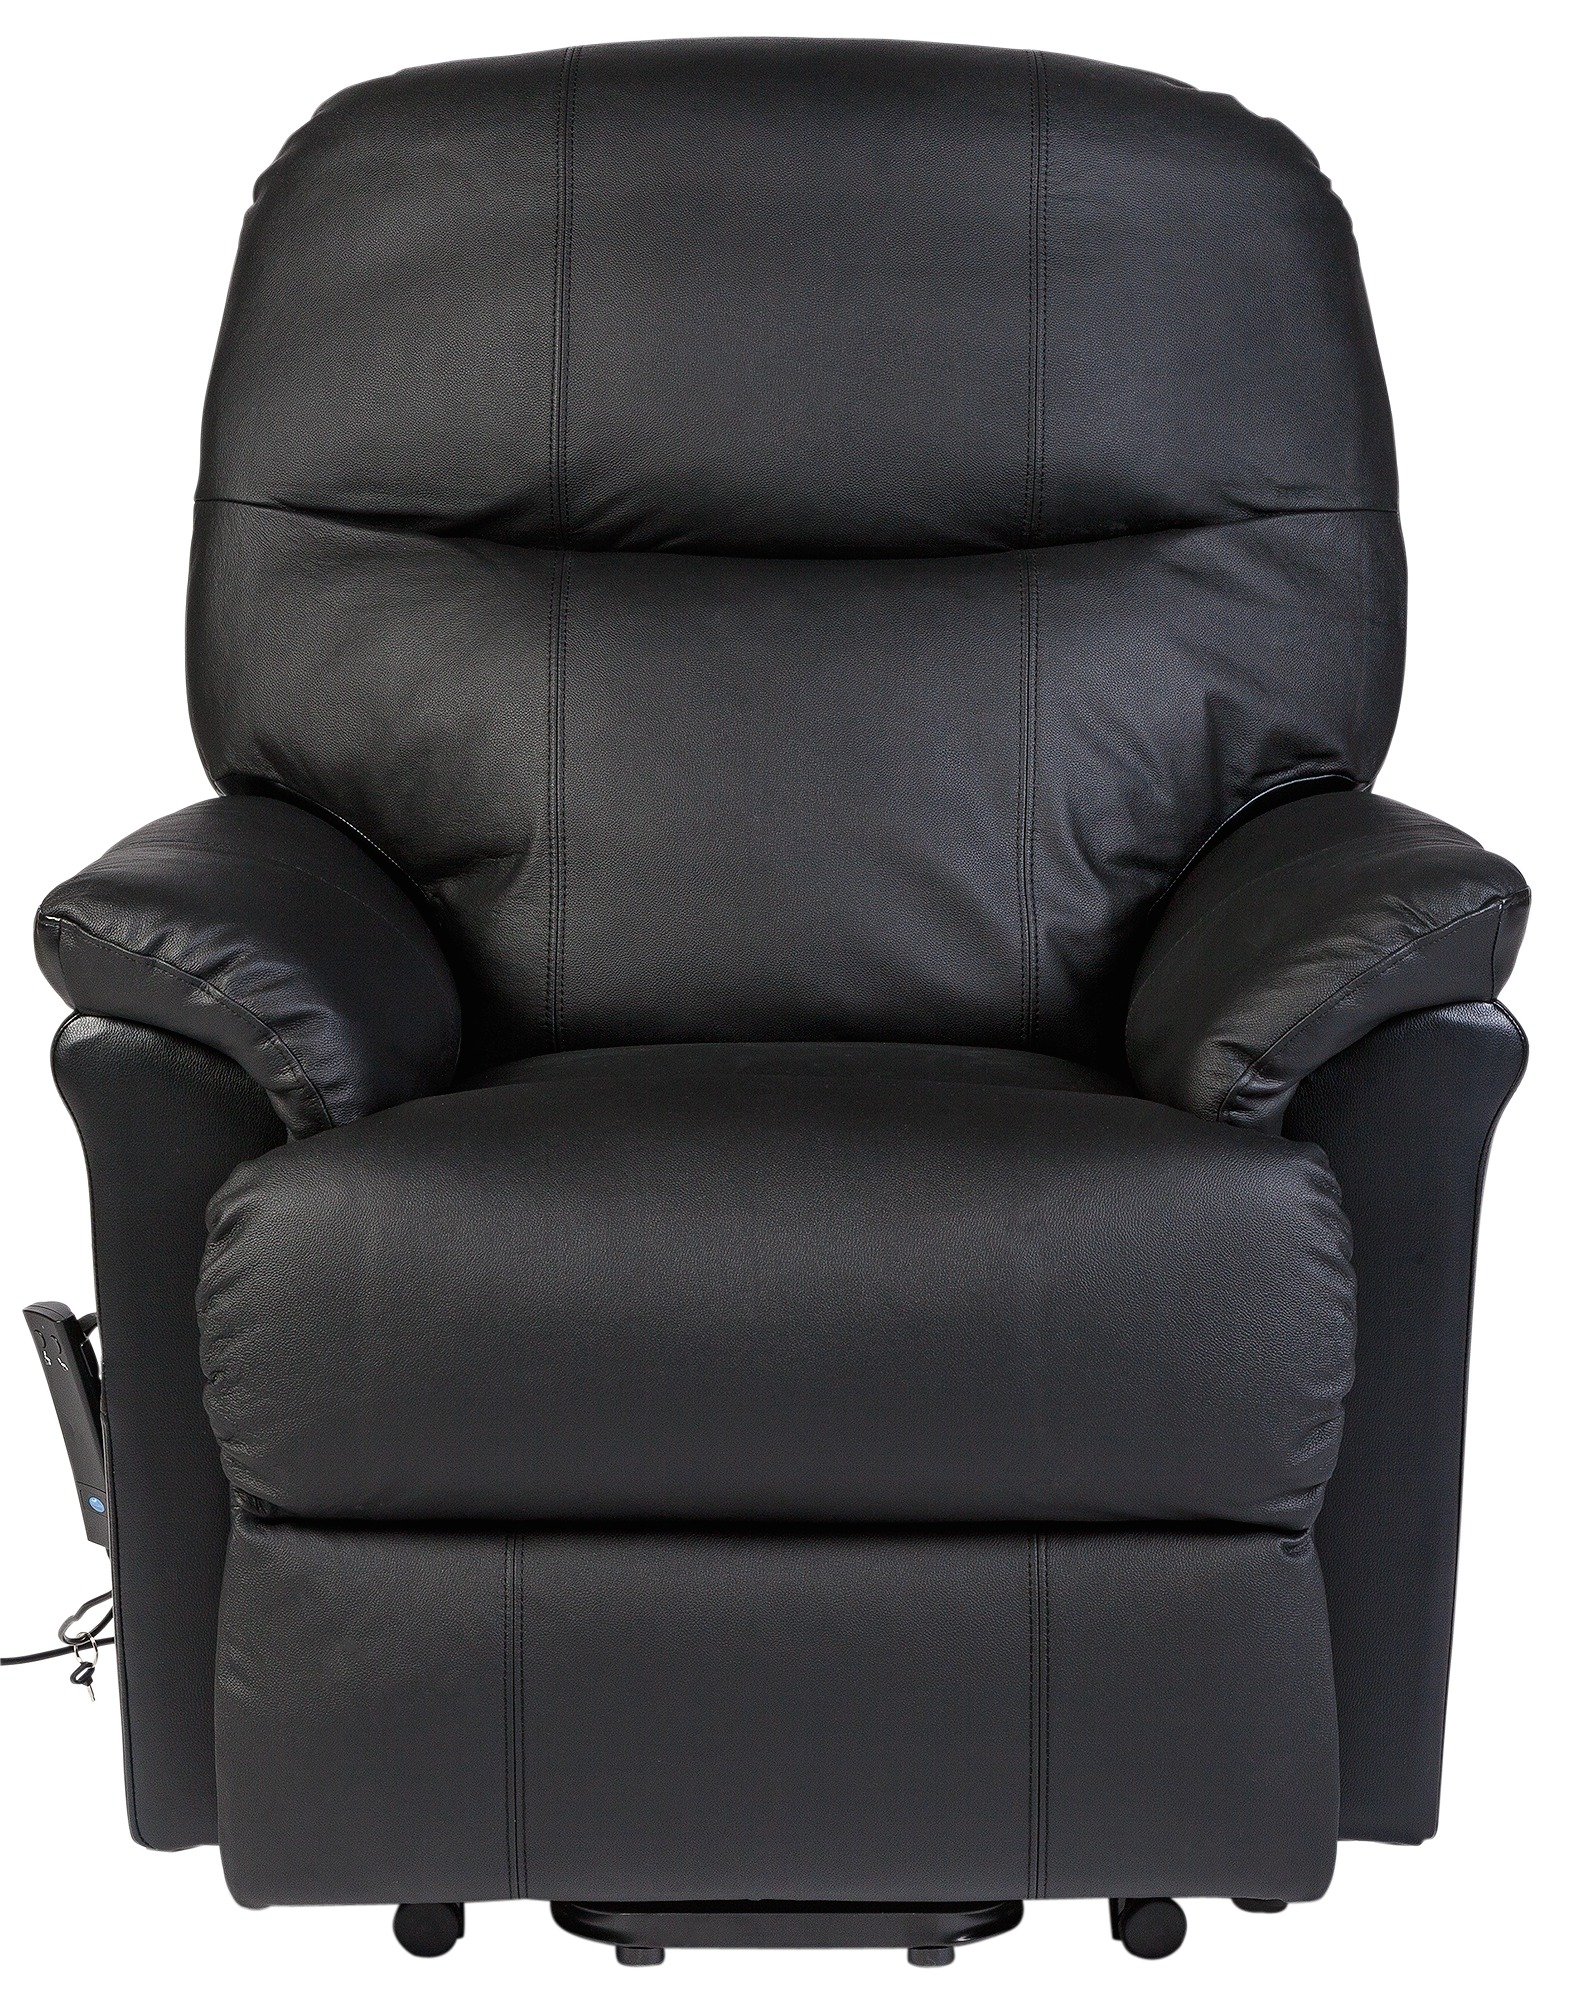 Lars Riser Recliner Leather Chair w/ Single Motor - Black